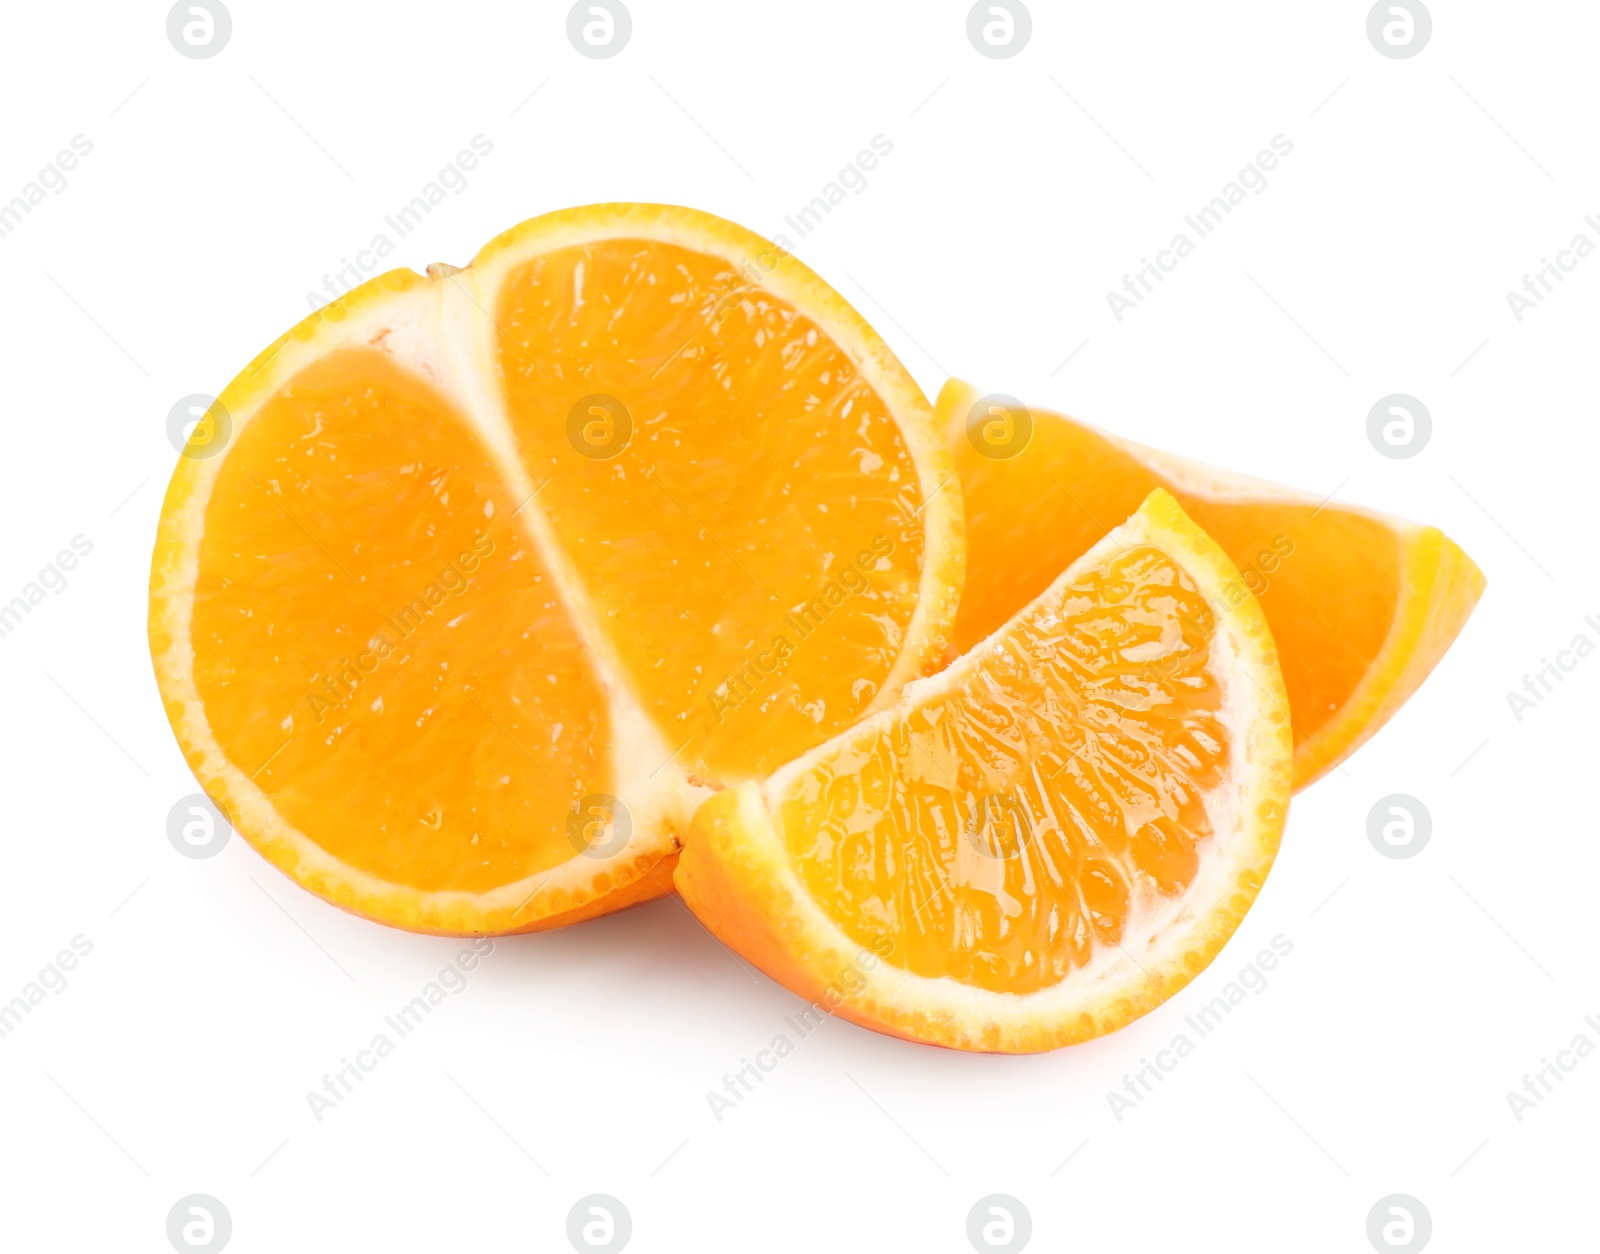 Photo of Cut fresh juicy tangerines isolated on white